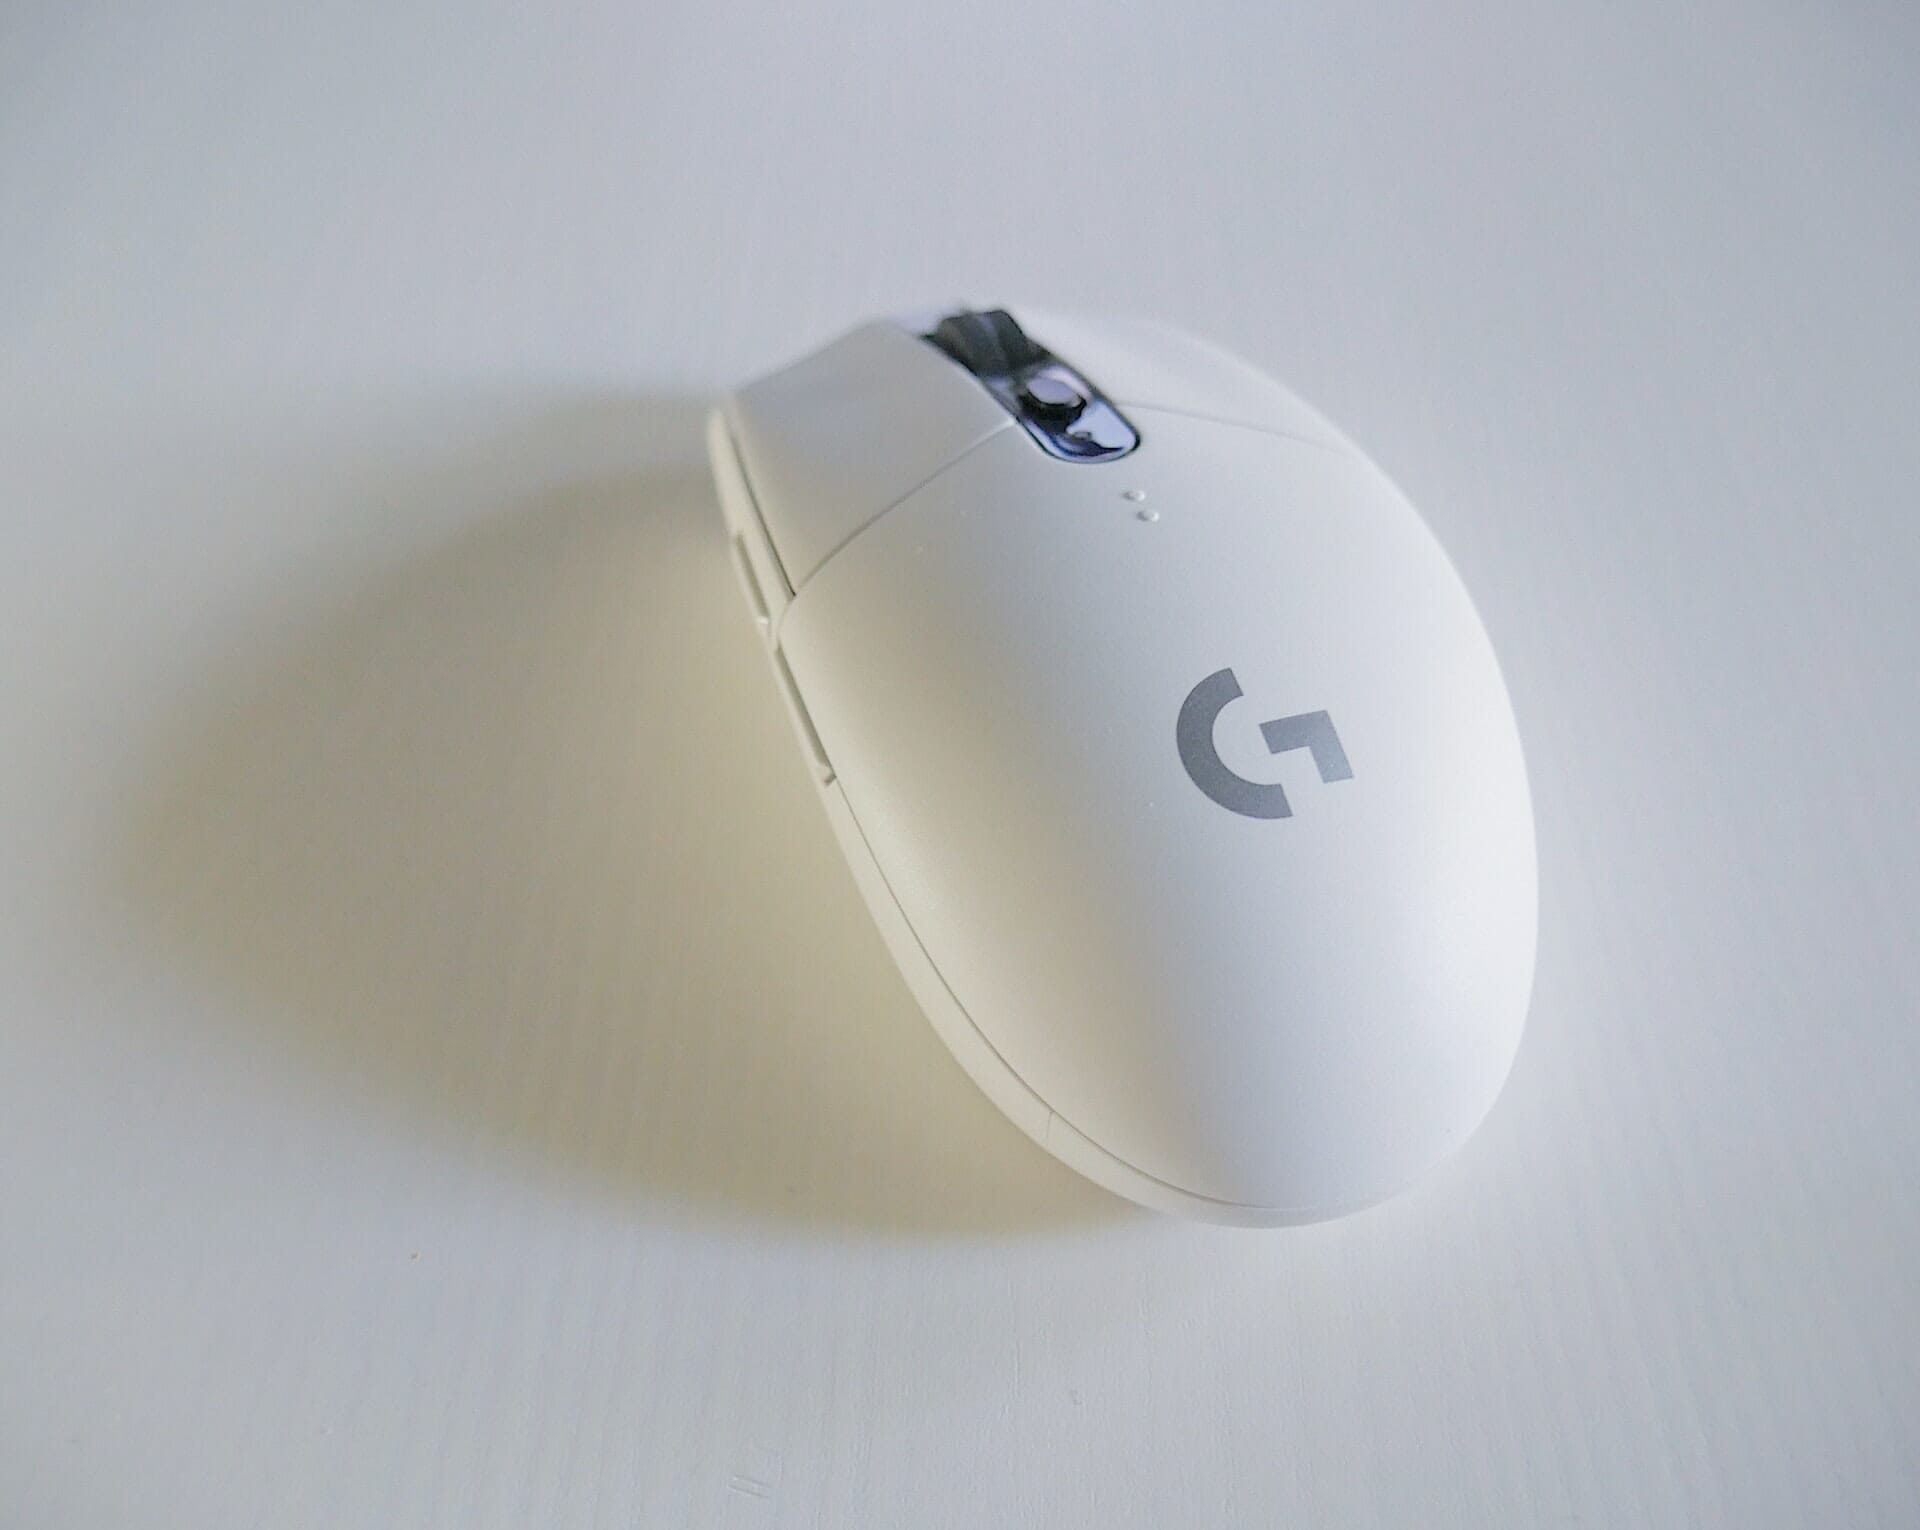 Fix stuttering in Logitech G305 mouse